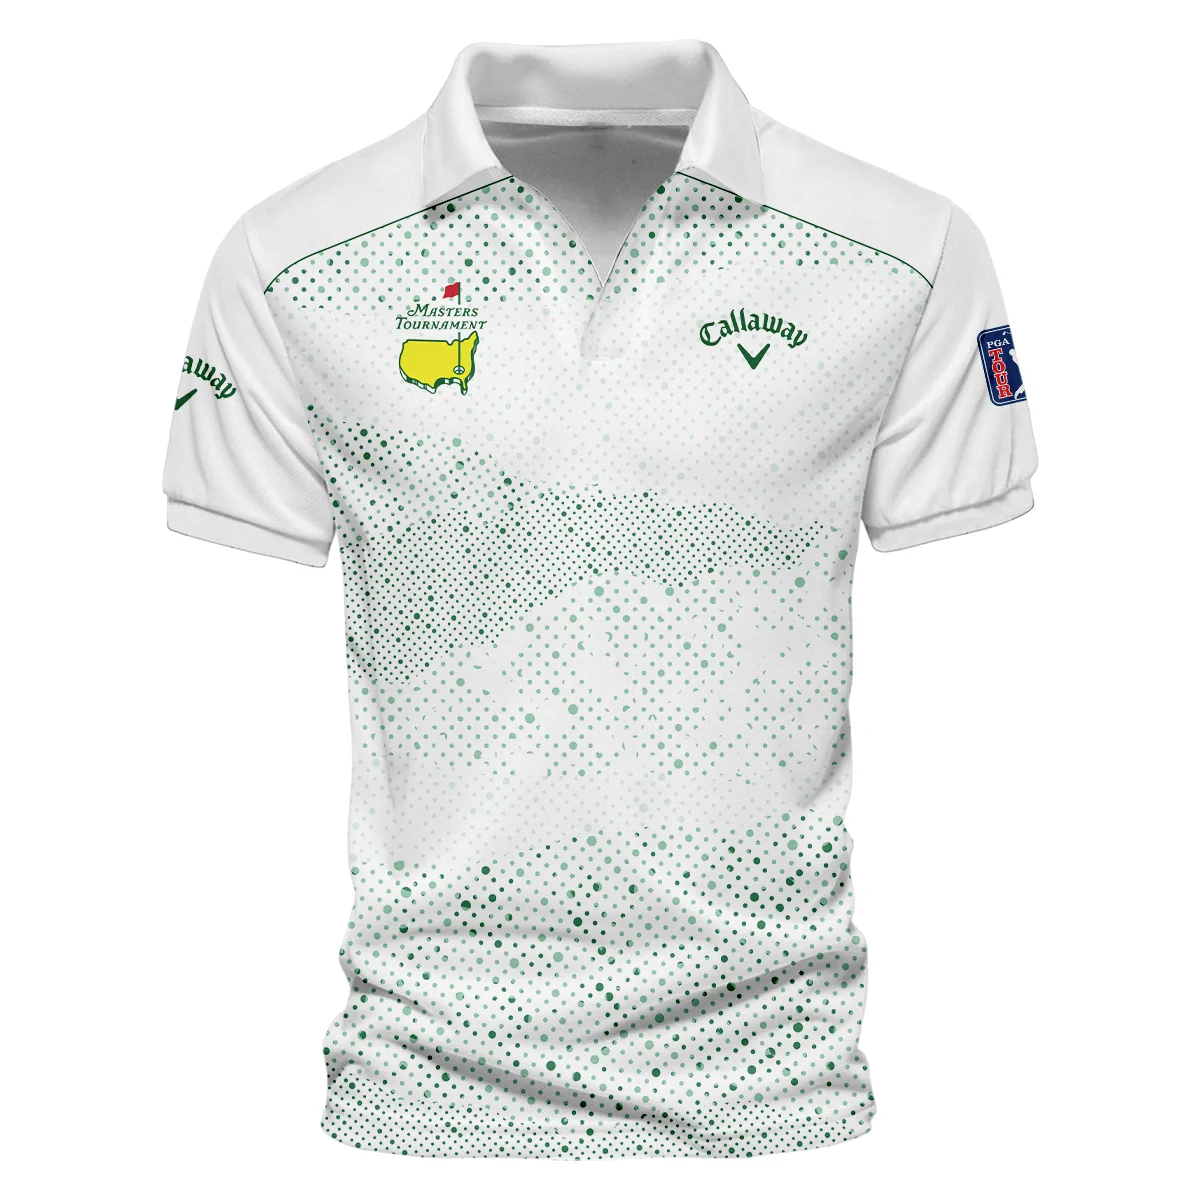 Golf Stye Classic White Mix Green Masters Tournament Callaway Vneck Polo Shirt Style Classic Polo Shirt For Men